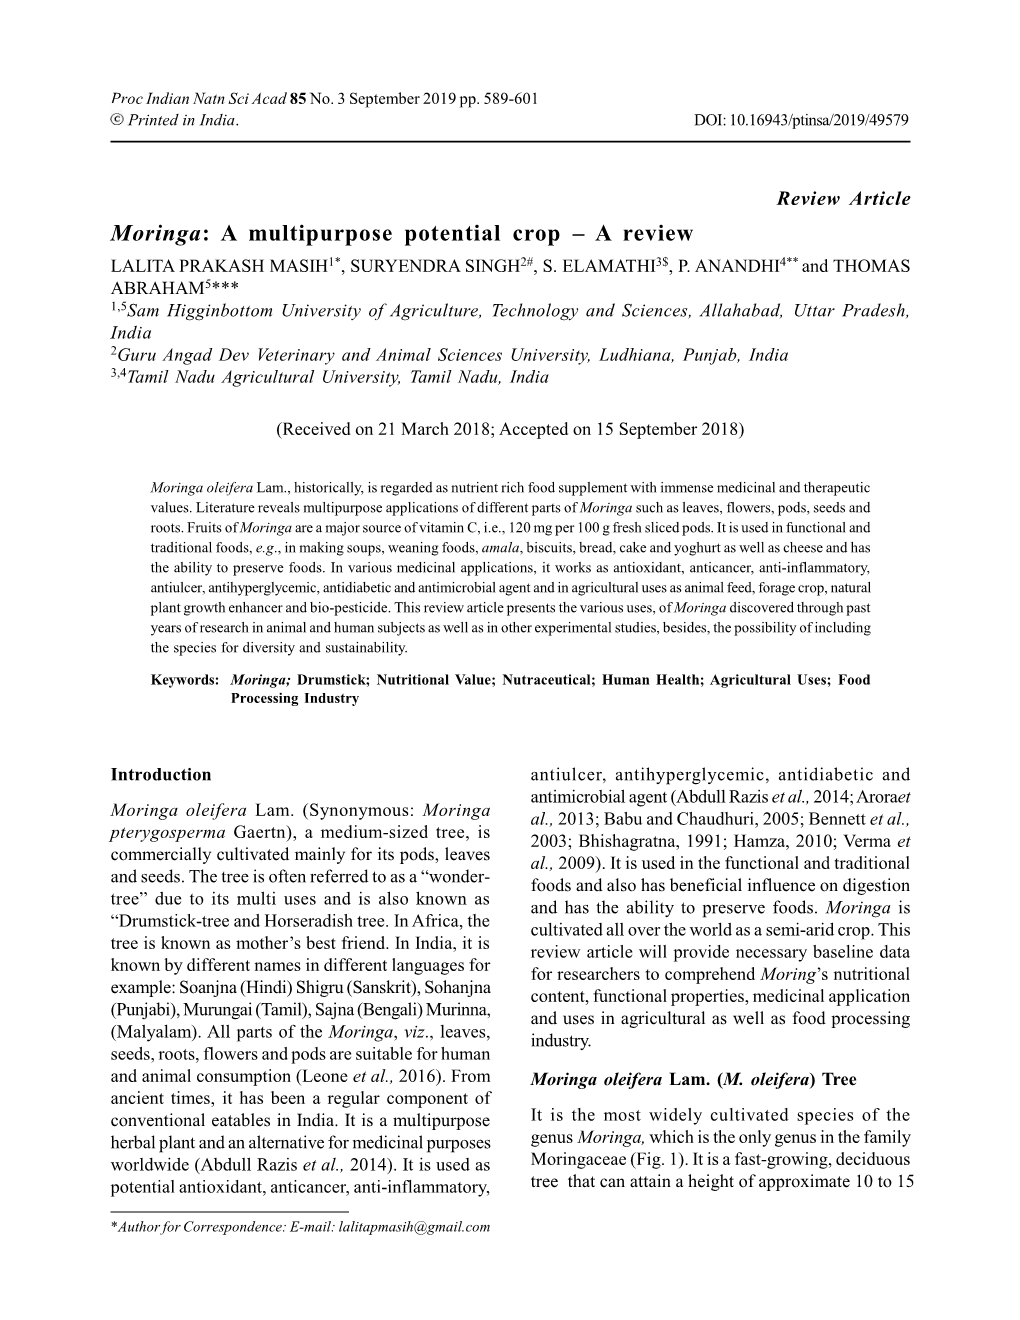 Moringa: a Multipurpose Potential Crop – a Review LALITA PRAKASH MASIH1*, SURYENDRA SINGH2#, S